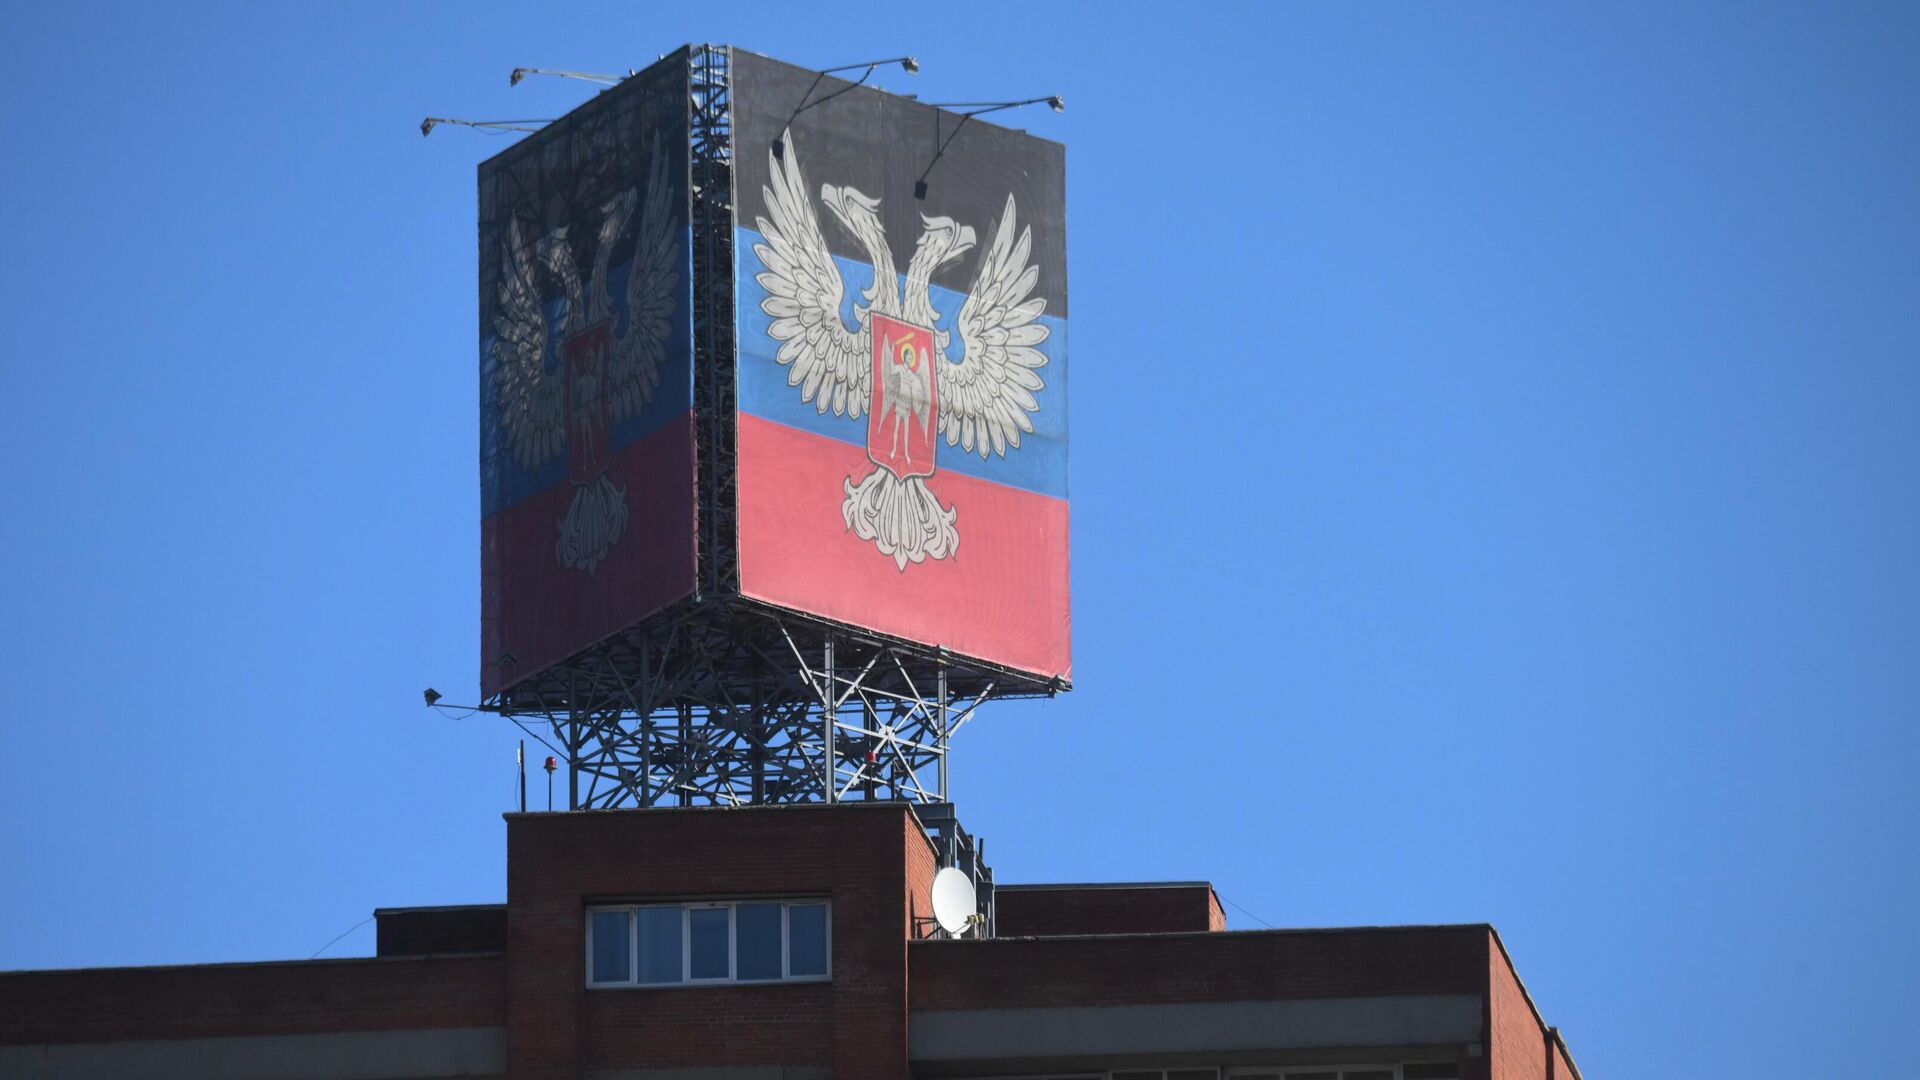 Reklaminė juosta su DLR vėliava ant pastato stogo Donecke - Sputnik Lietuva, 1920, 16.03.2022